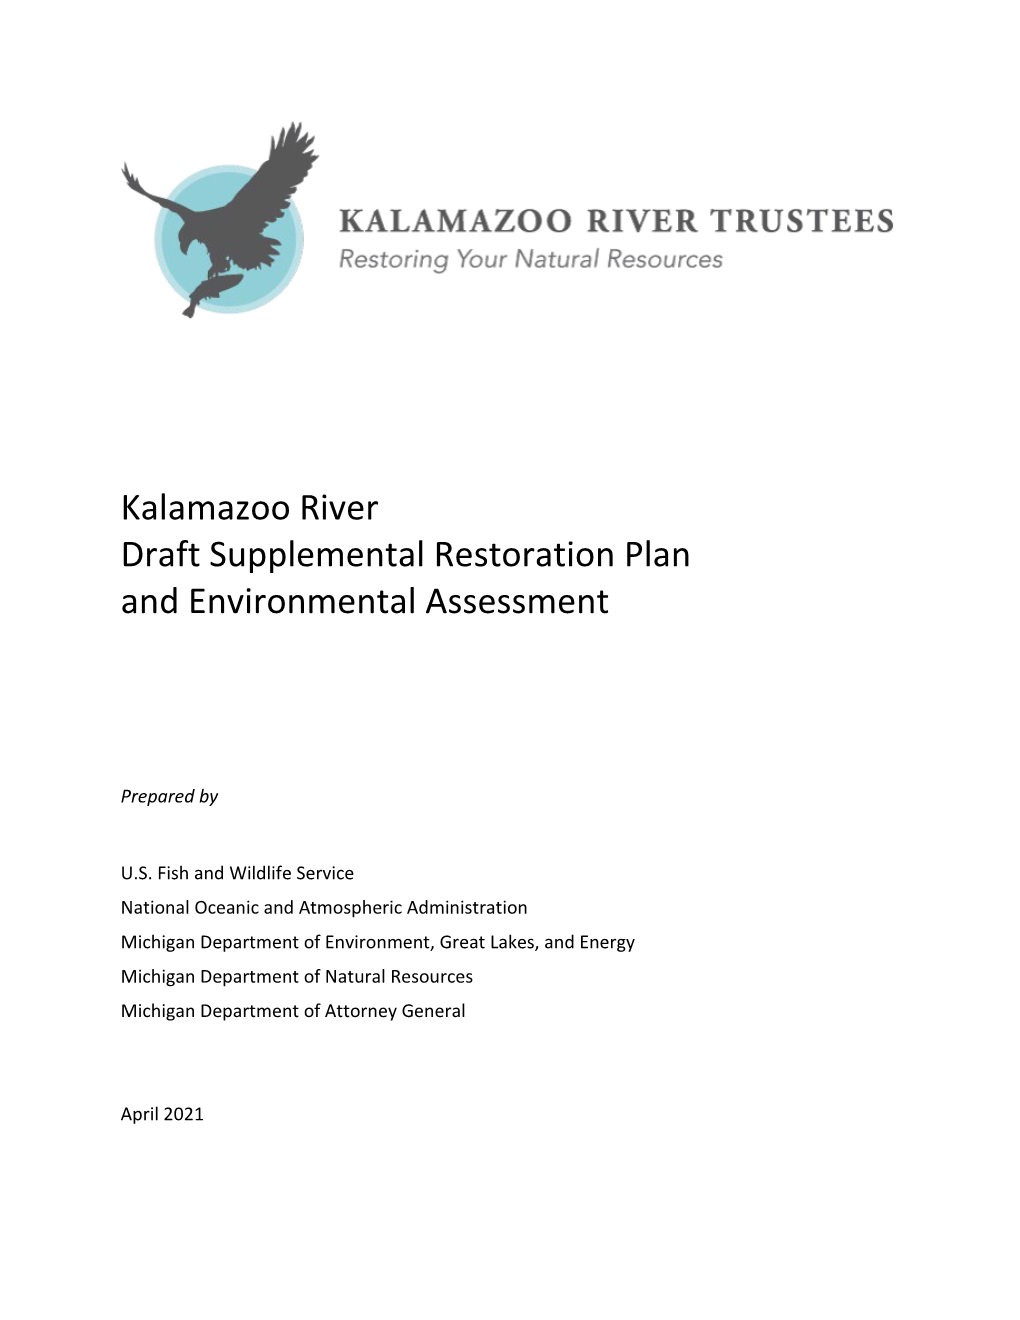 Kalamazoo River Draft Supplemental Restoration Plan and Environmental Assessment